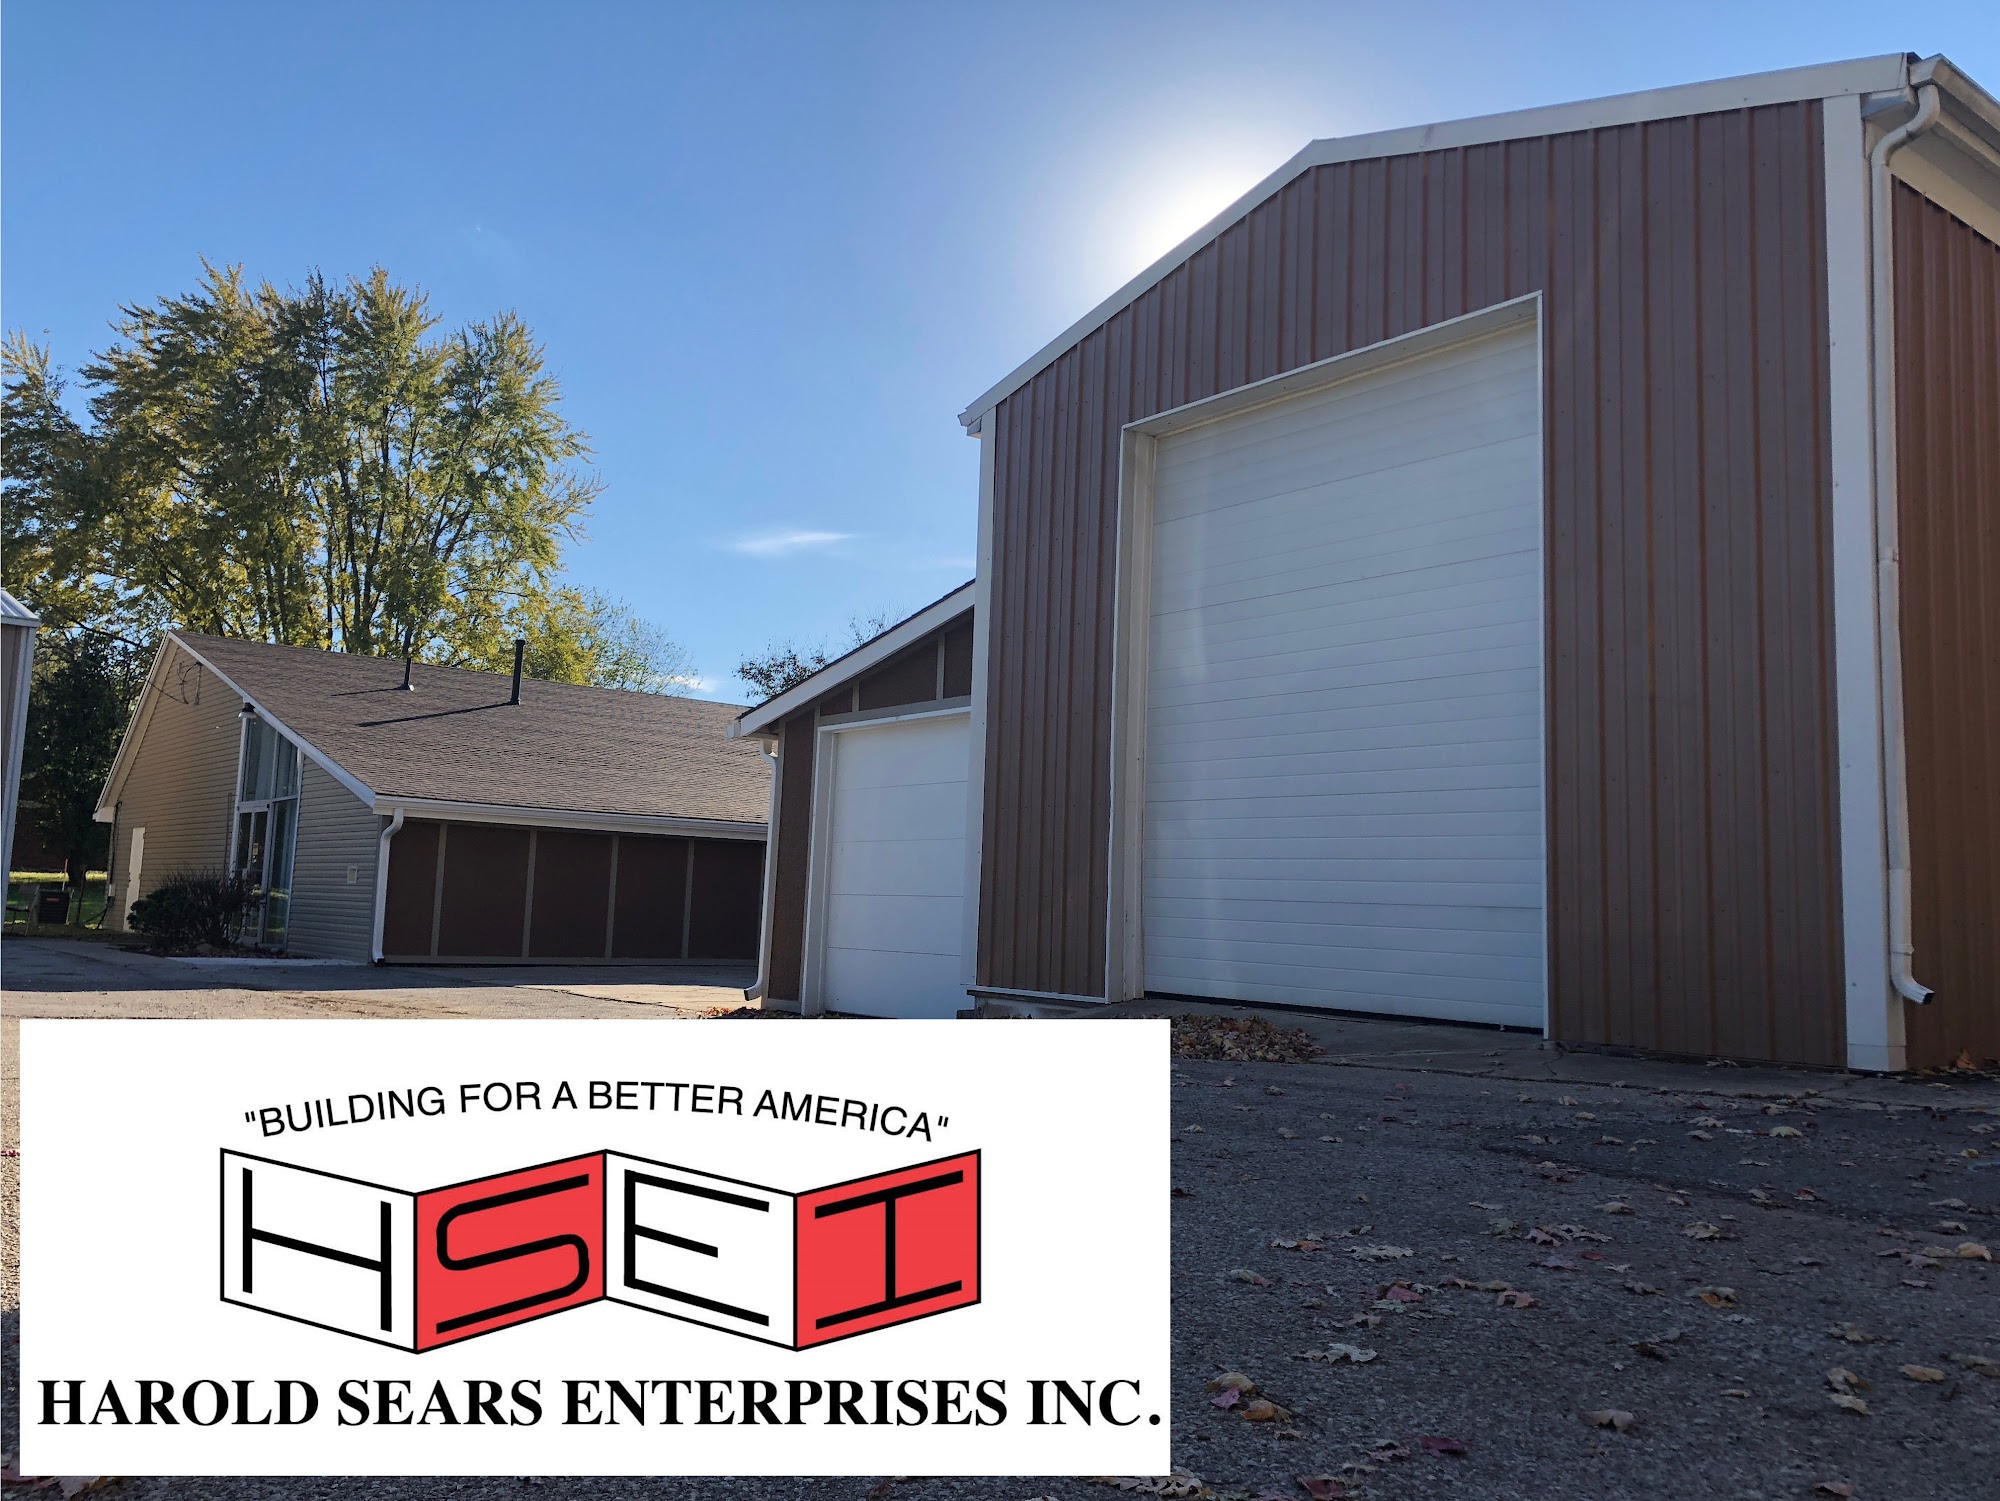 Harold Sears Enterprises